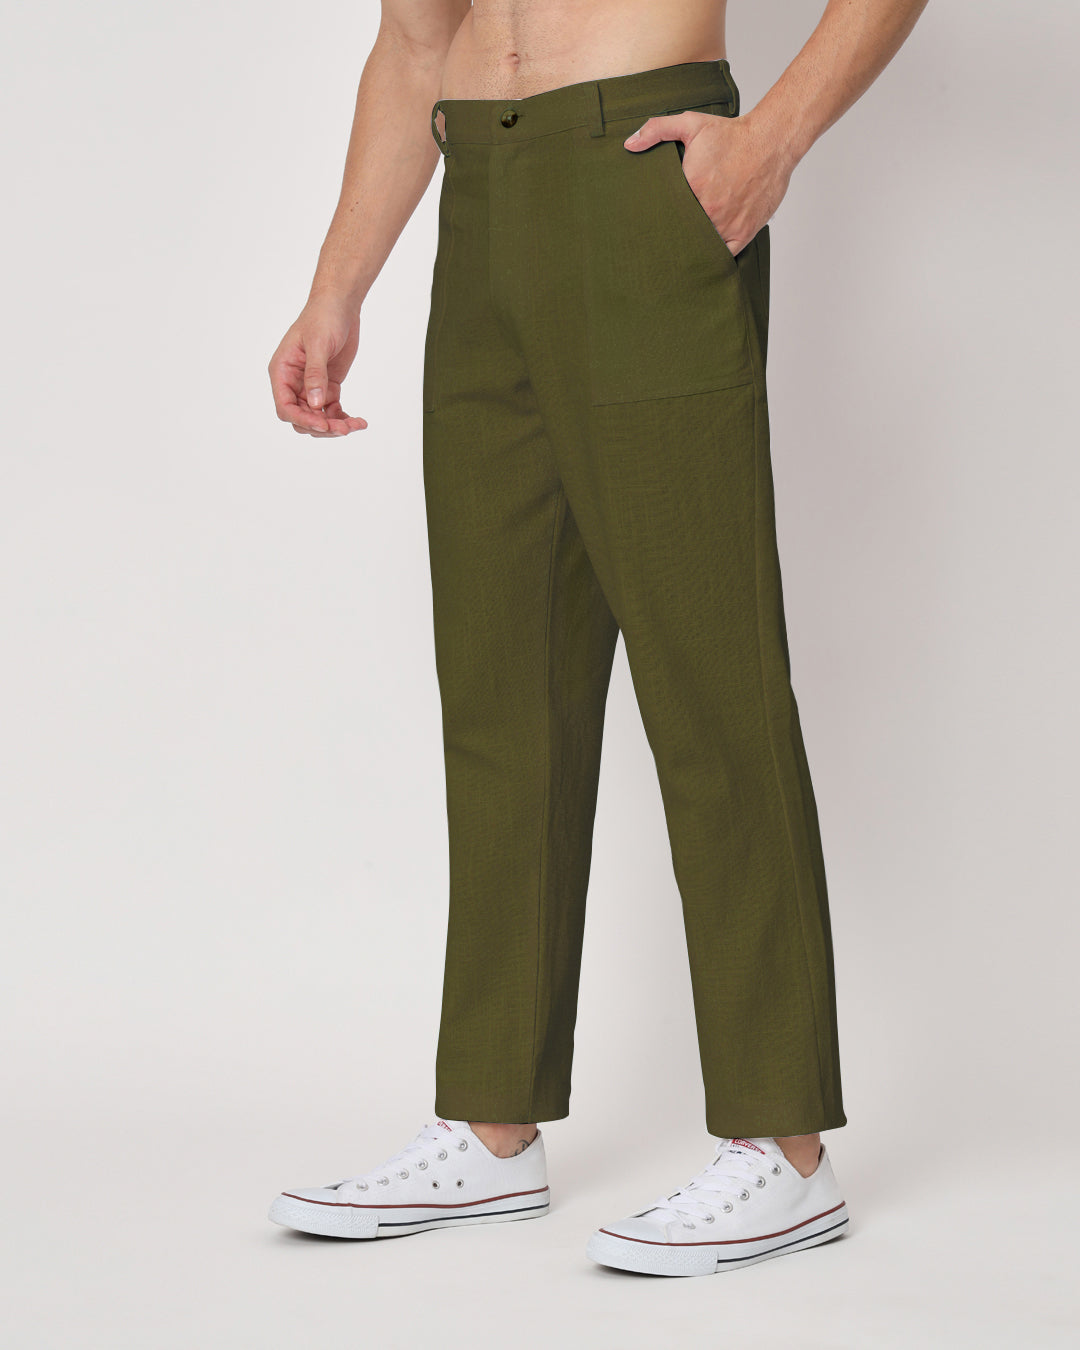 Combo : Comfy Ease Fondant Pink & Olive Green Men's Pants - Set of 2